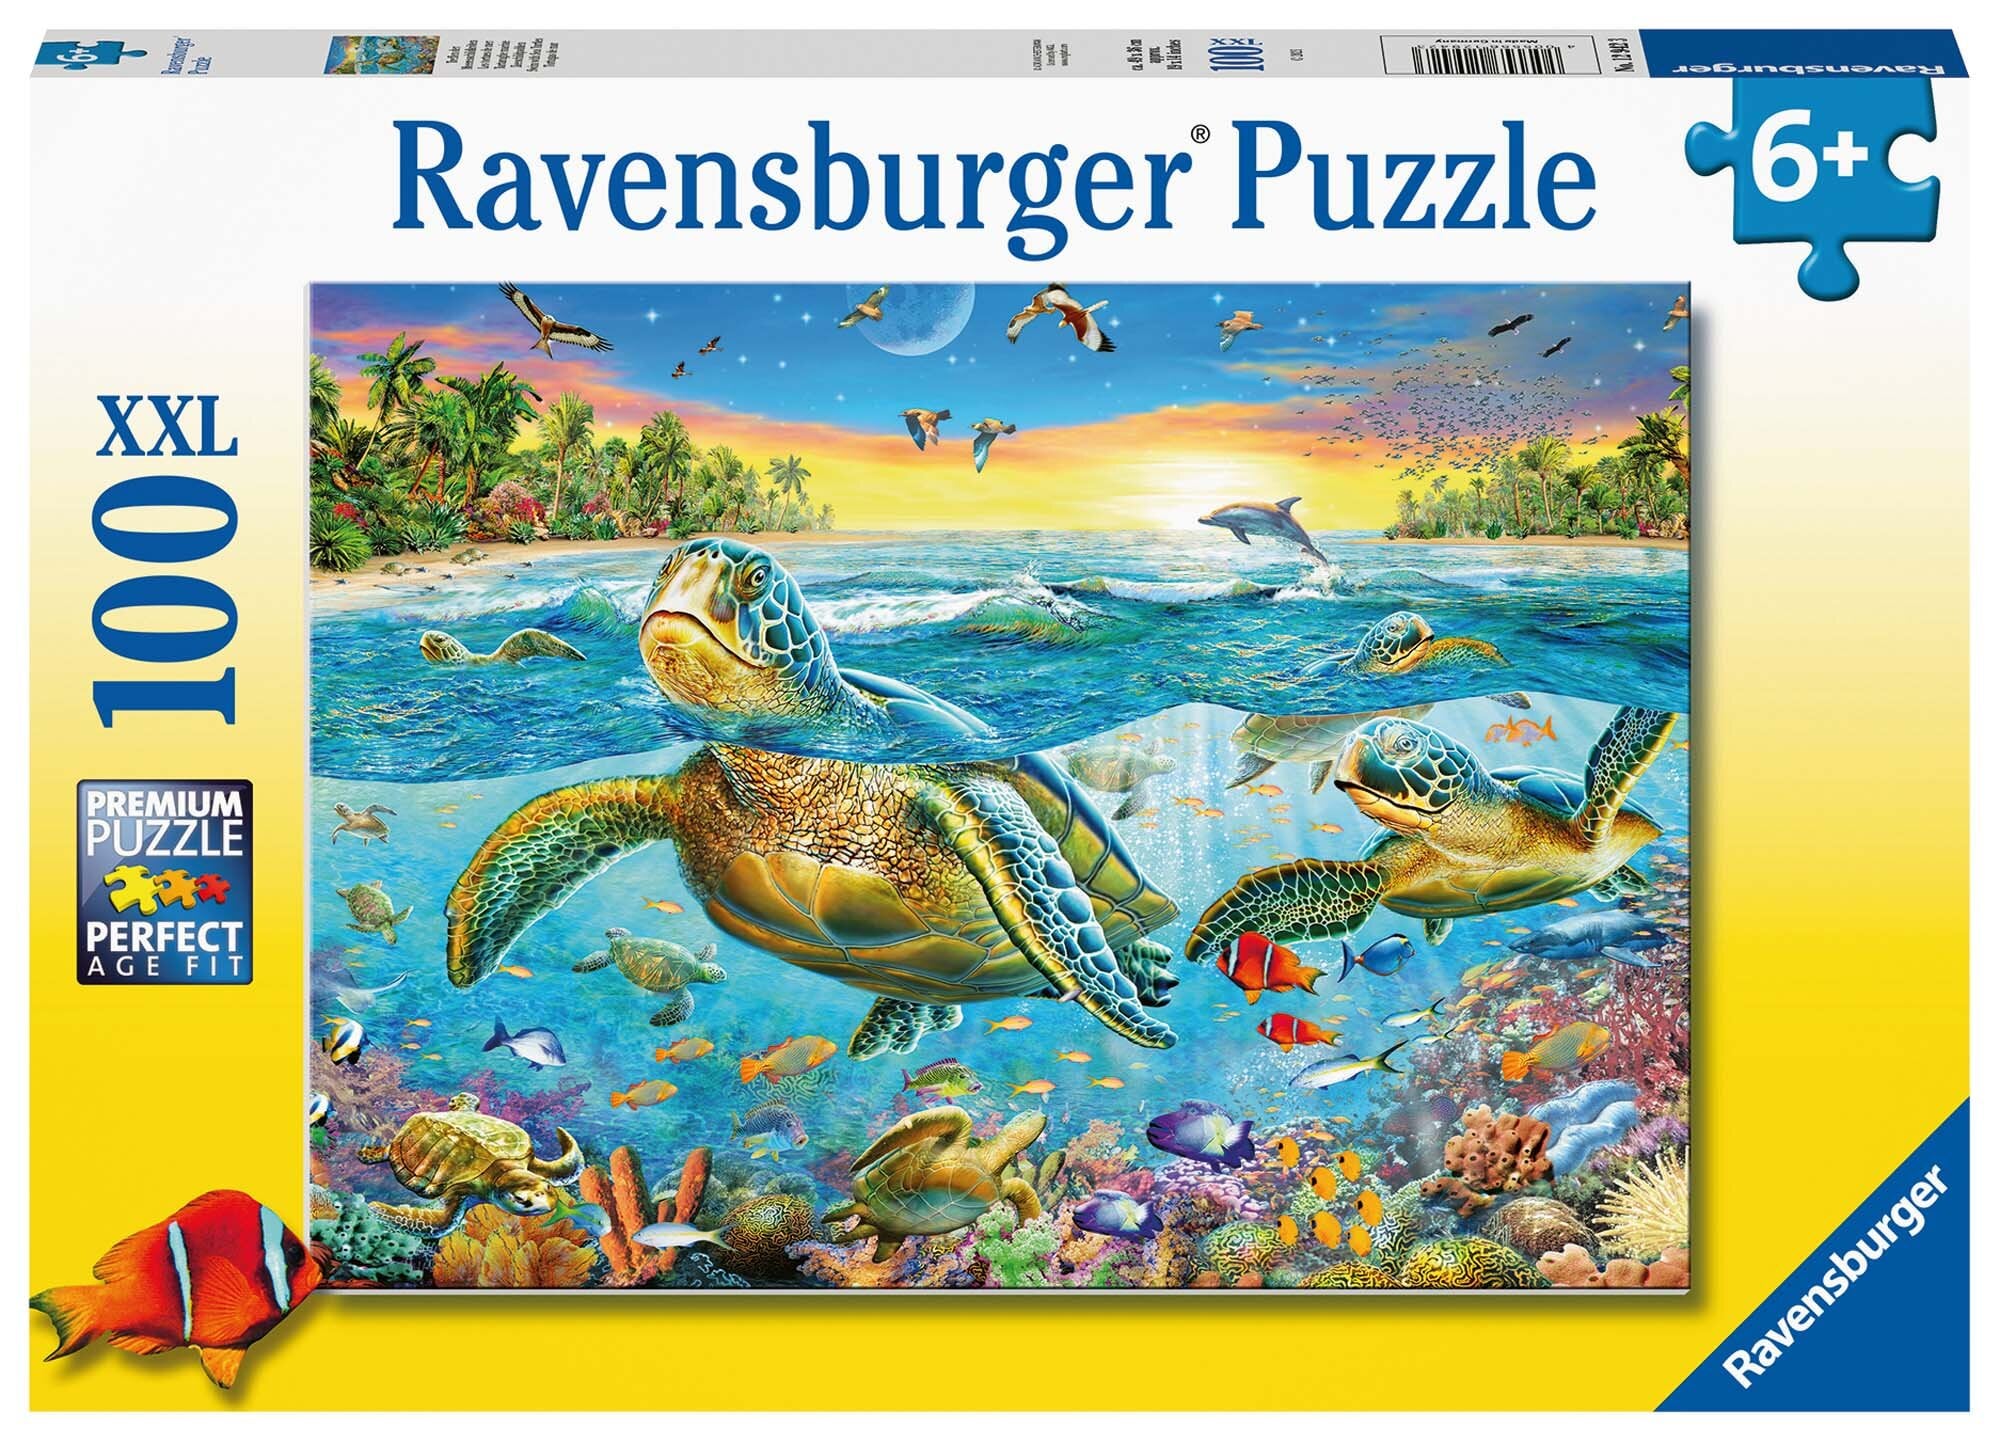 Ravensburger Pussel - Simma med sköldpaddor 100 bitar XXL